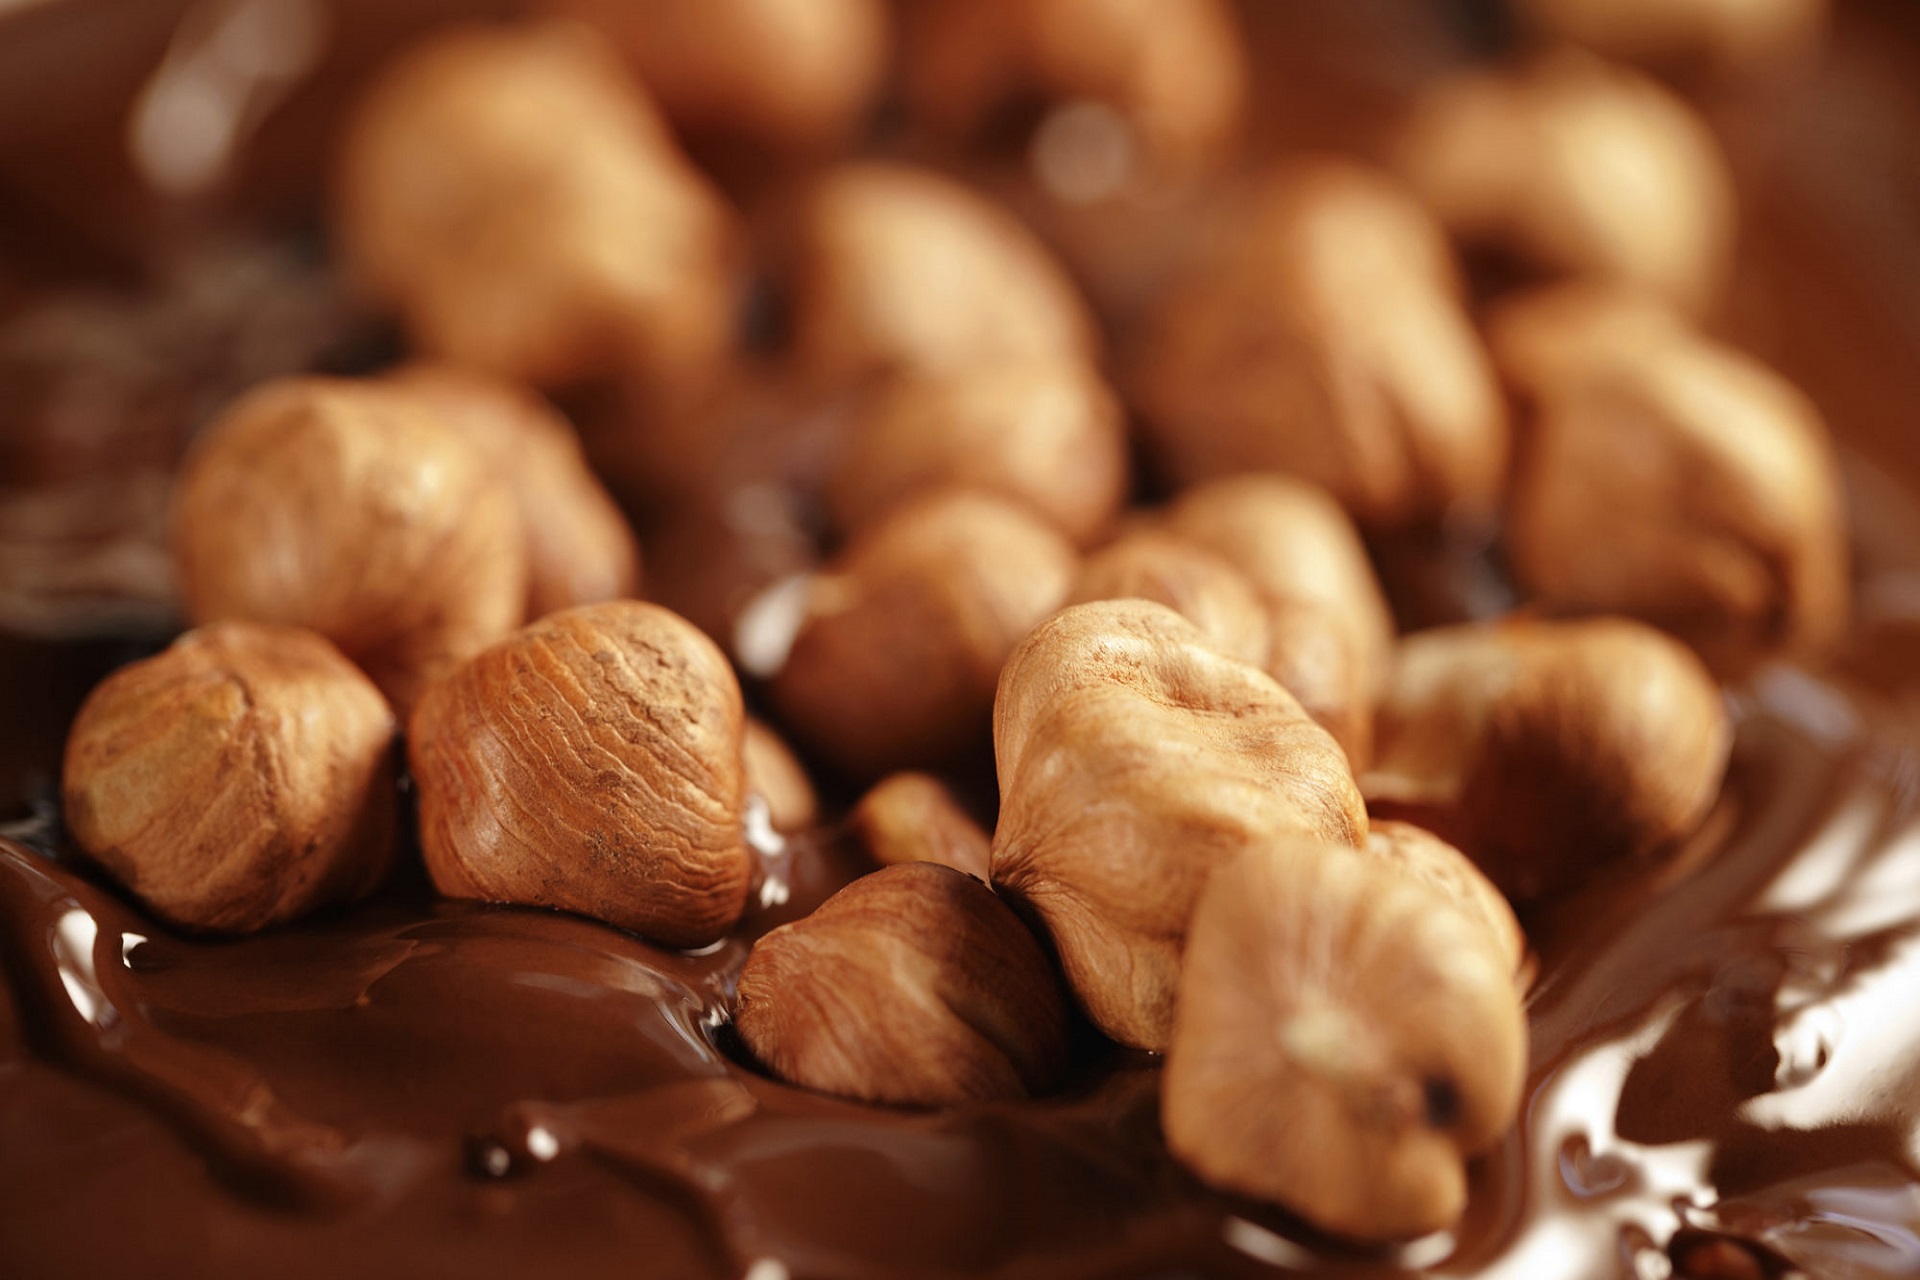 Hazelnuts; Benefits, Eating, and Storage